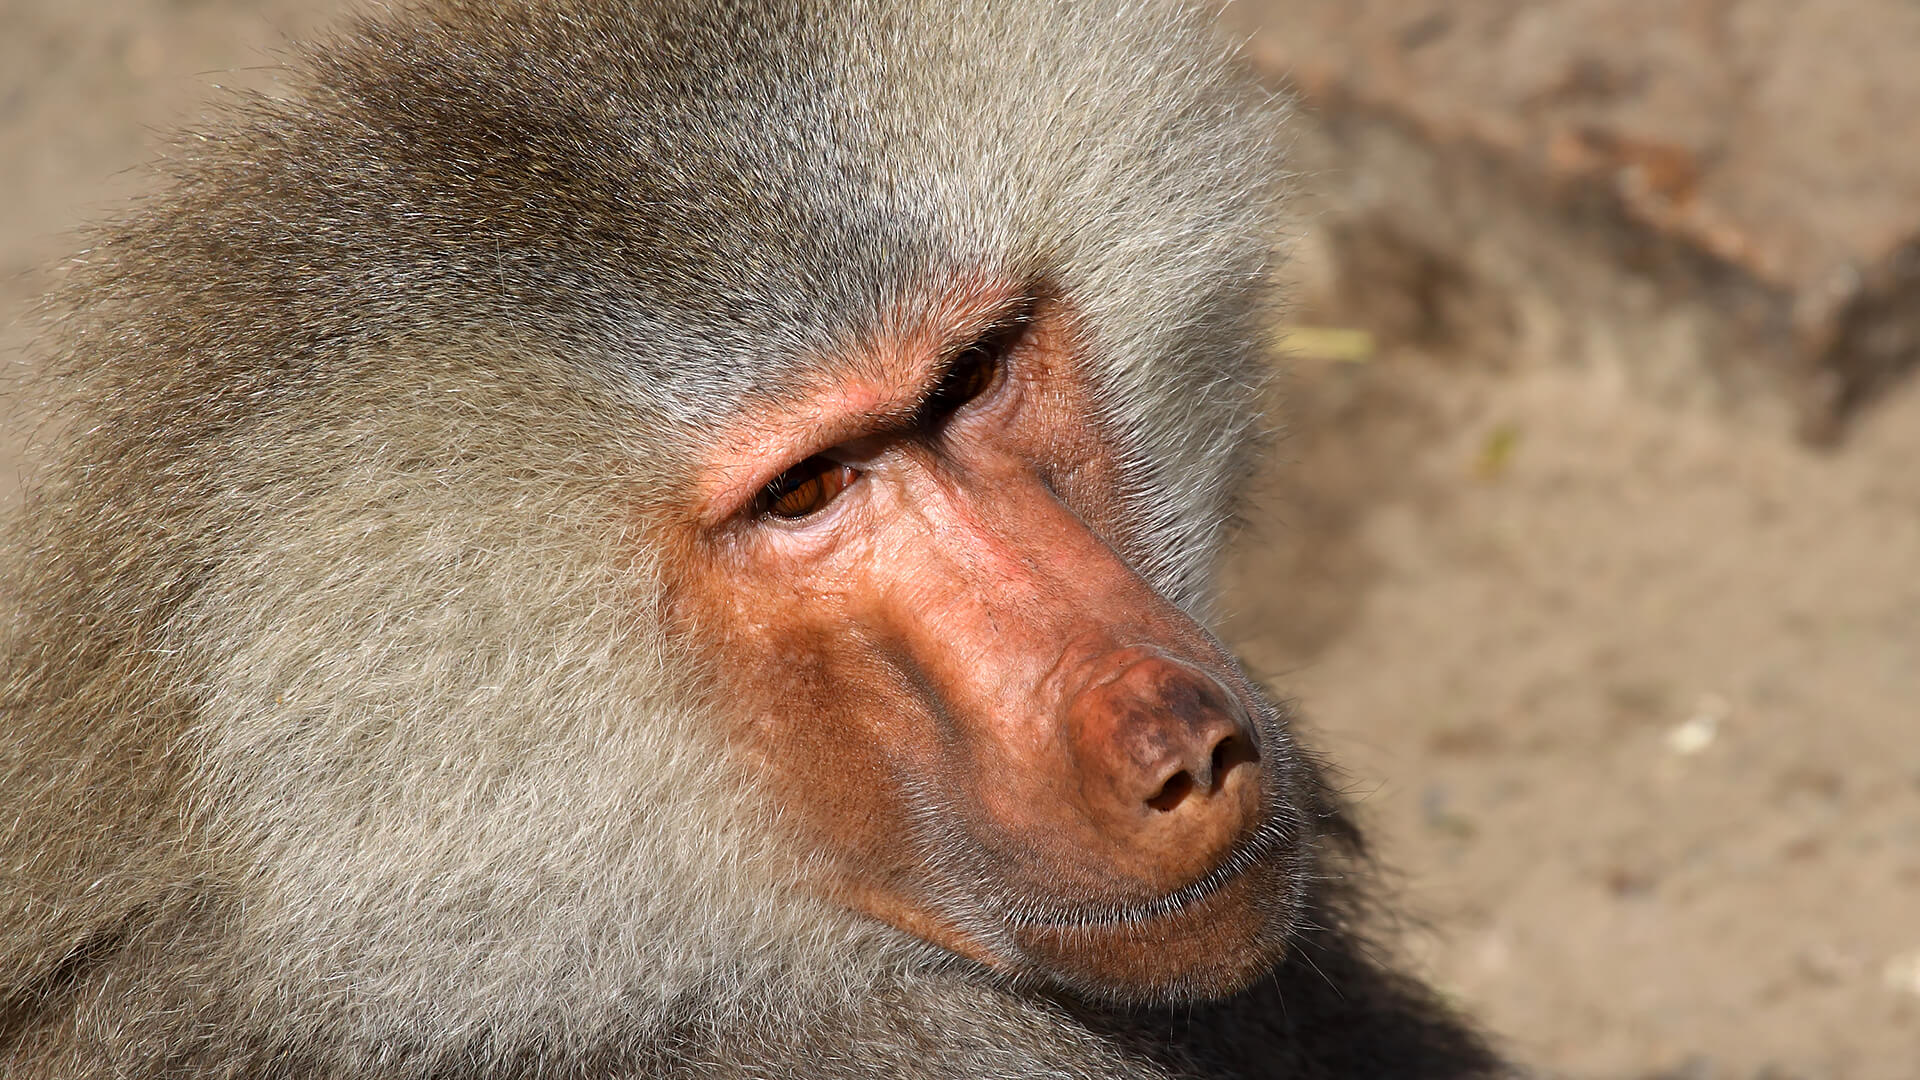 Close up of a hamadryas baboon's face